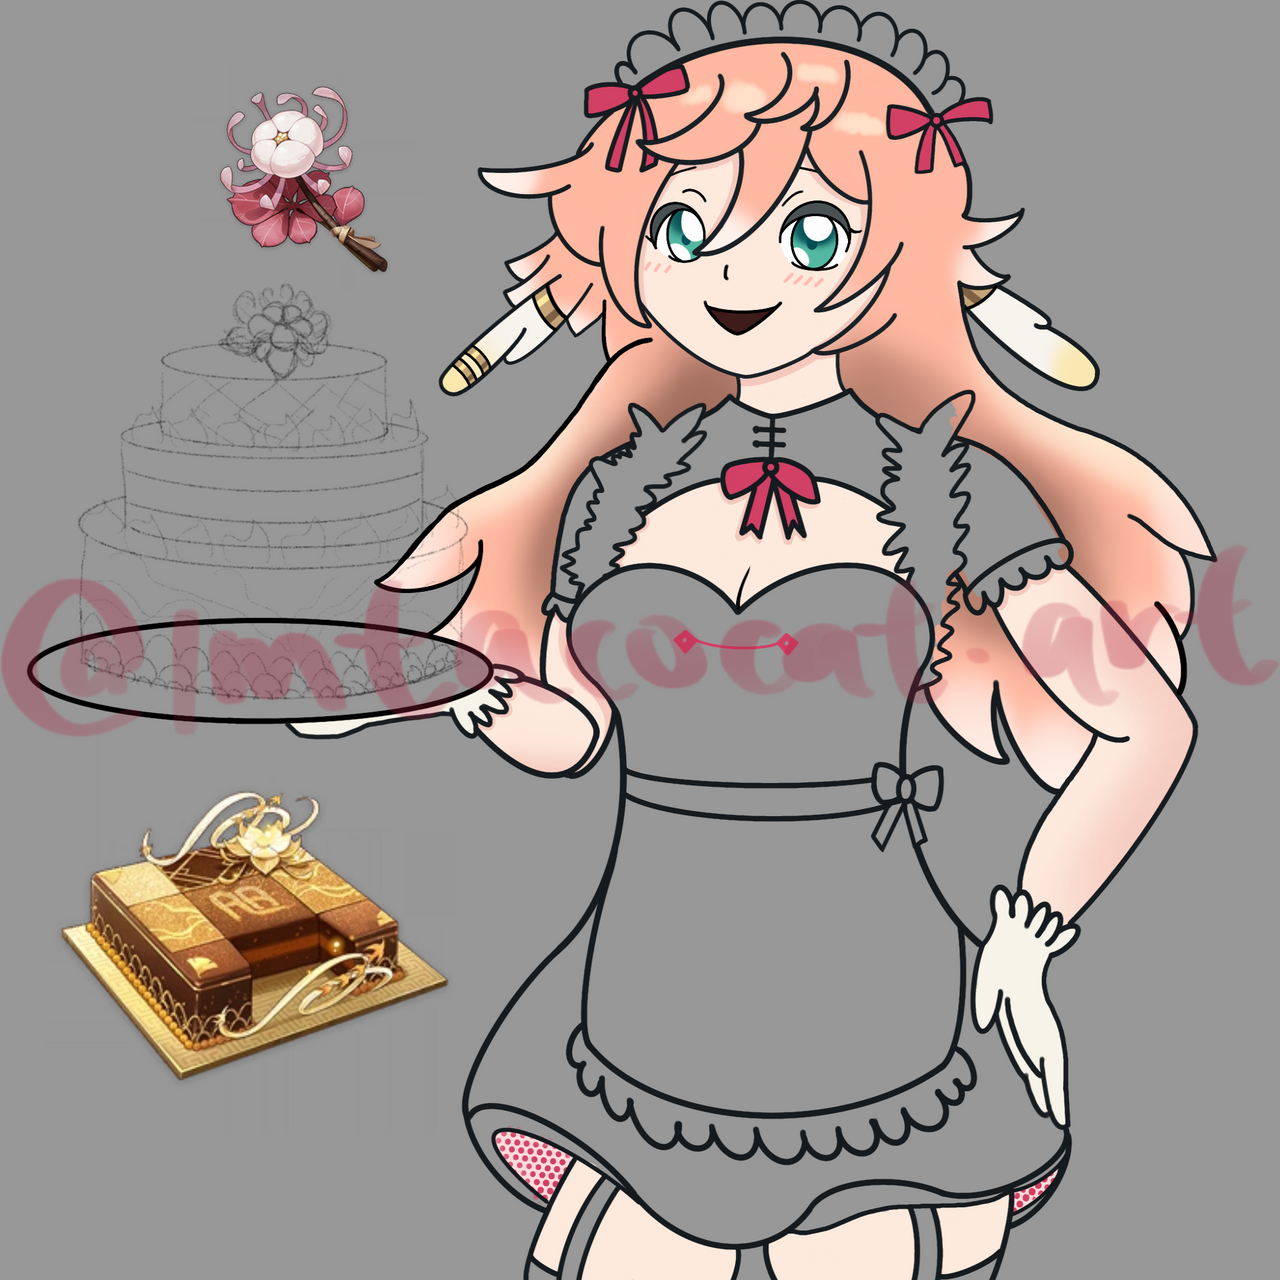 Cute Anime Girl Maid Cake Topper